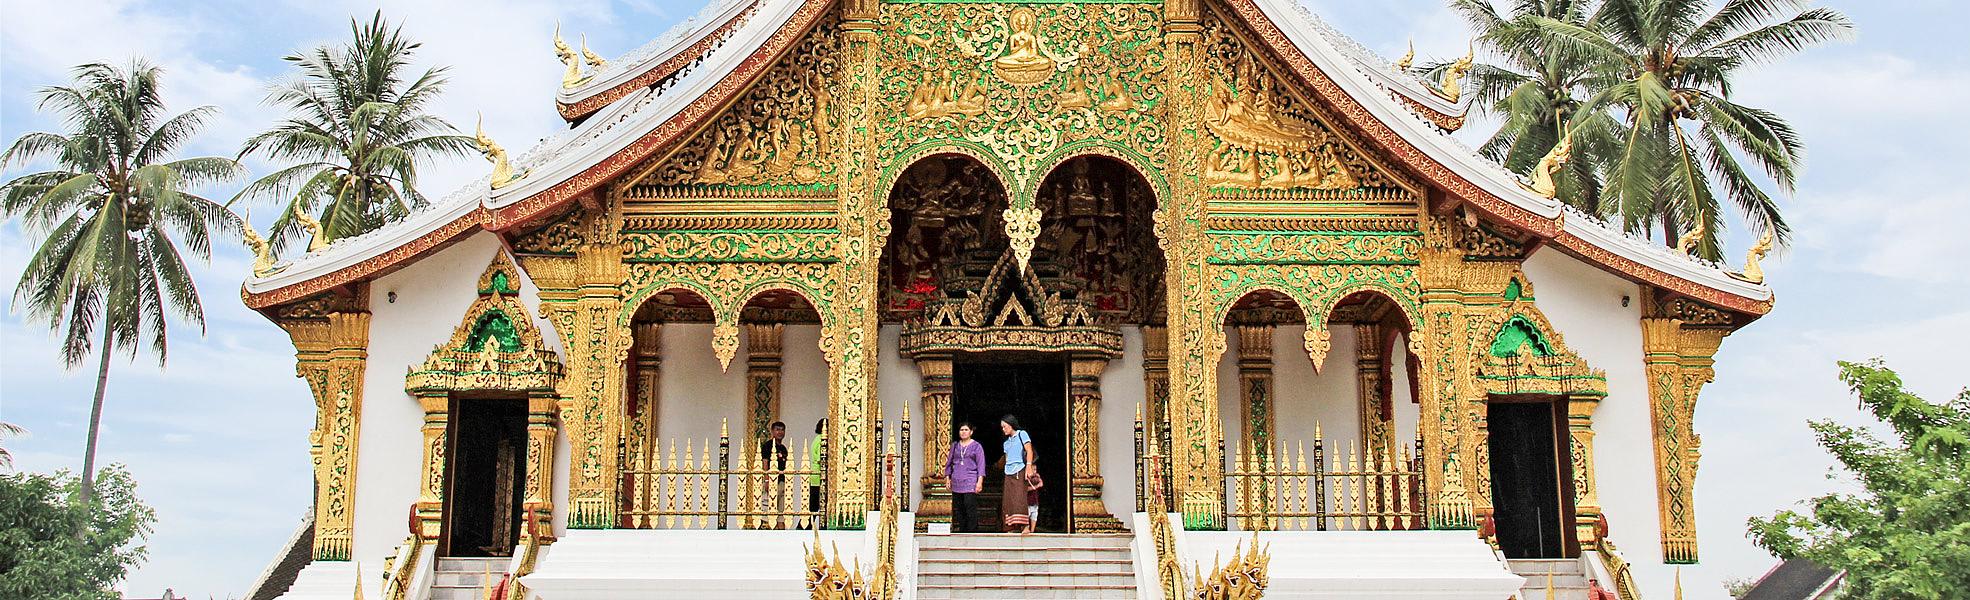 Thailand and Laos Tour: Bangkok, Chiang Mai & Luang Prabang